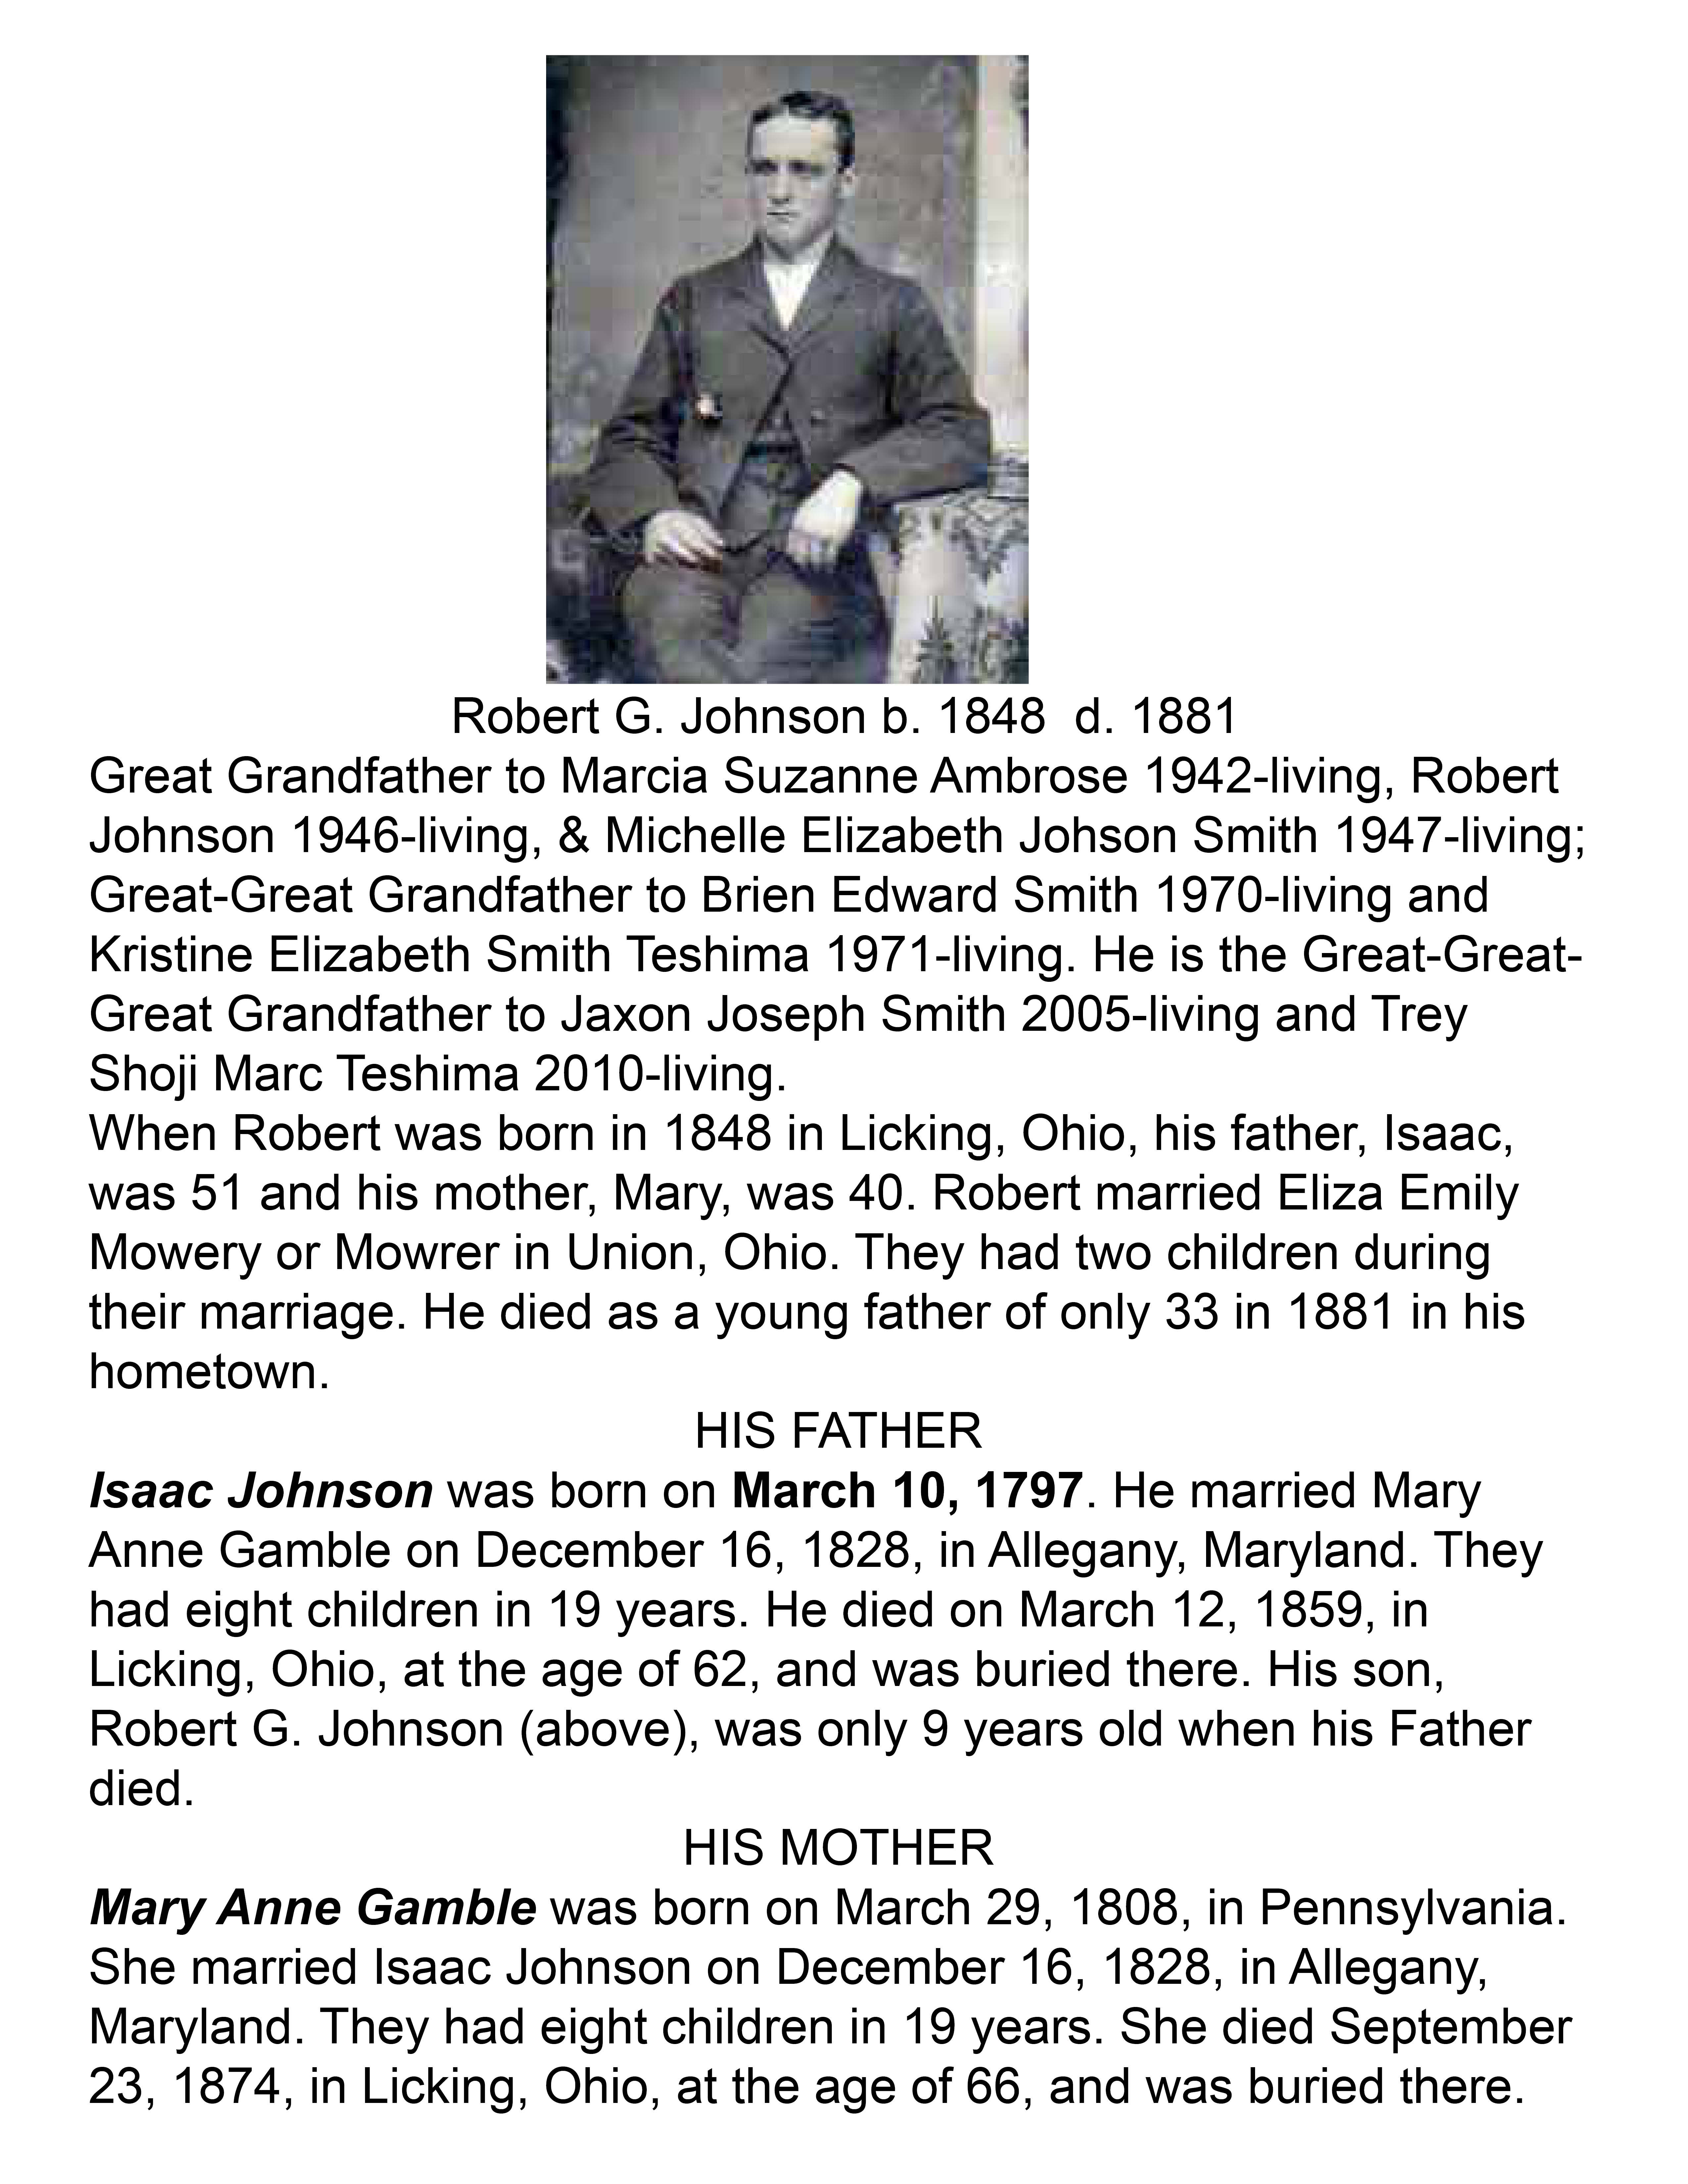 Robert G. Johnson, 1848-1881 My Great Grandfather, my Grandpa Johnson's Father